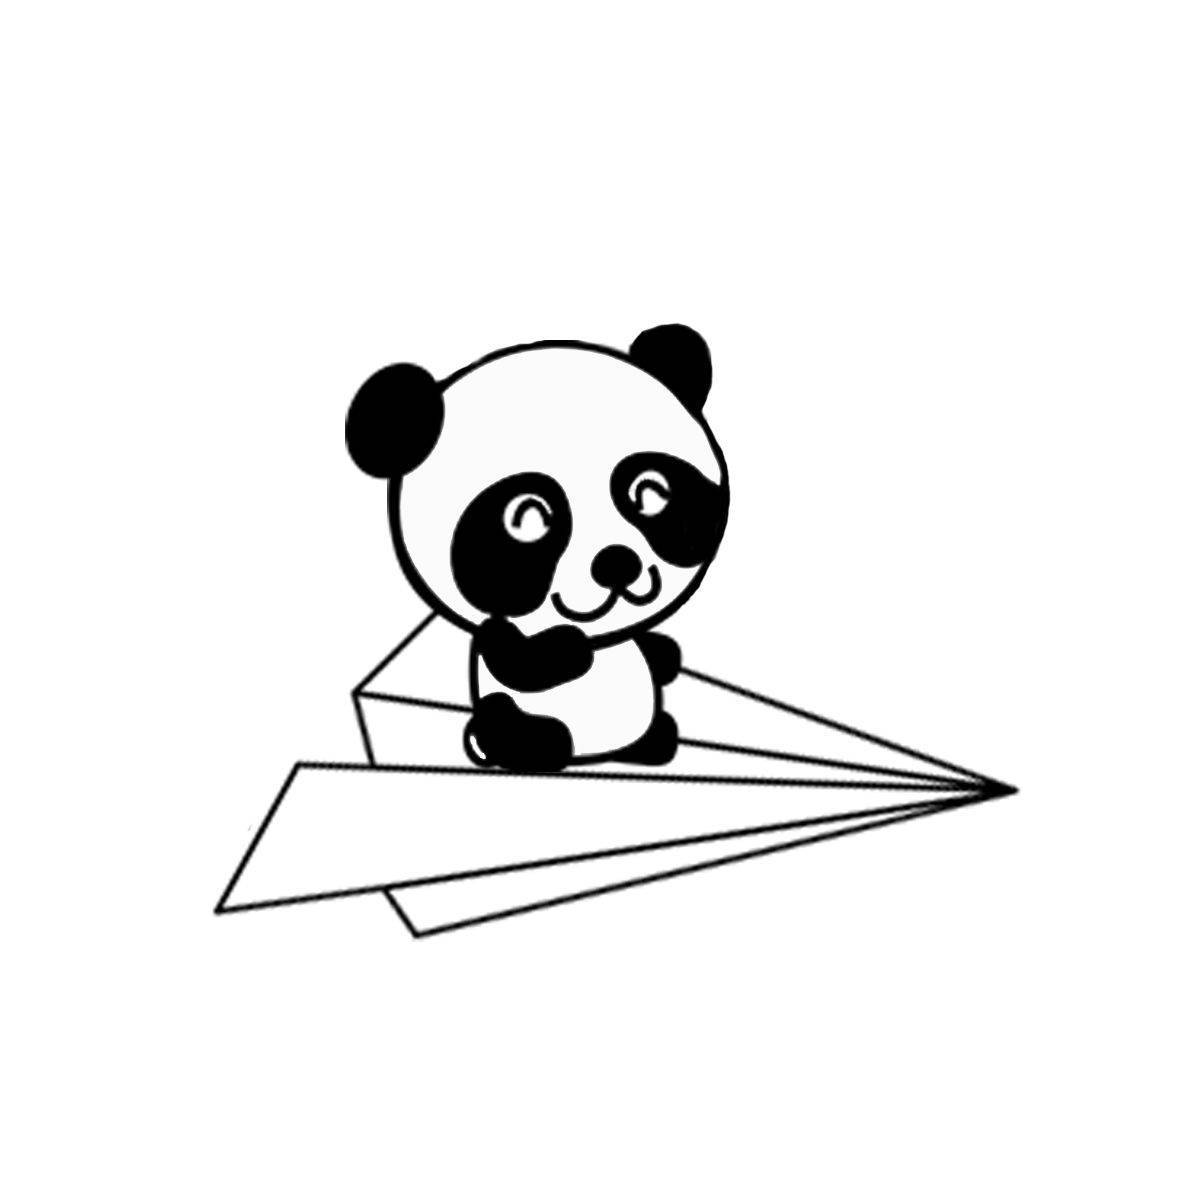 Coloring page playful panda